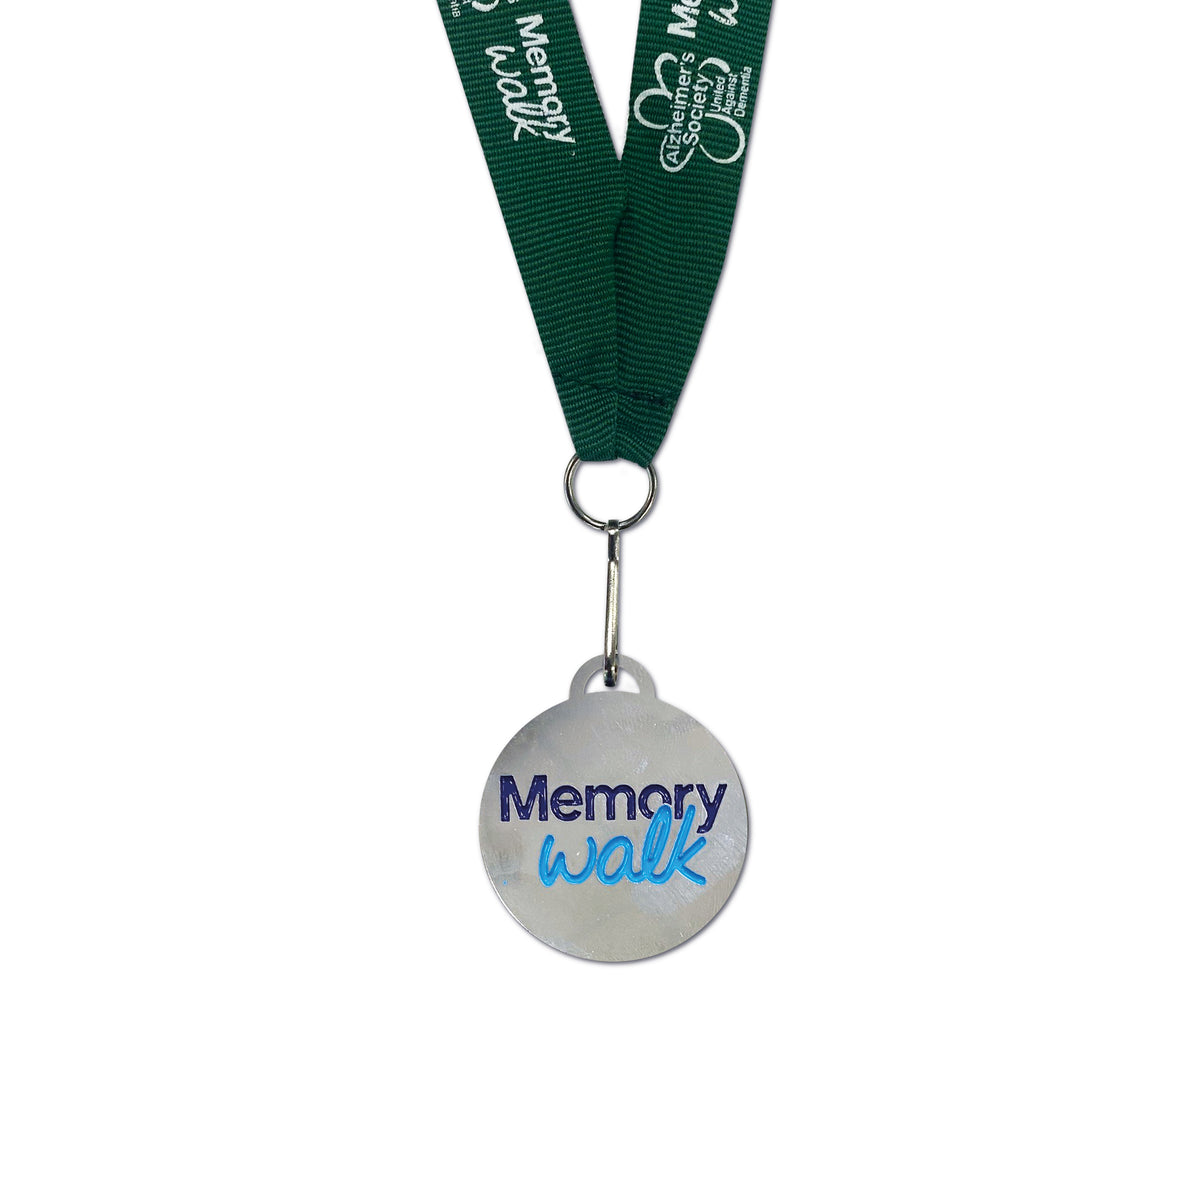 MW medal